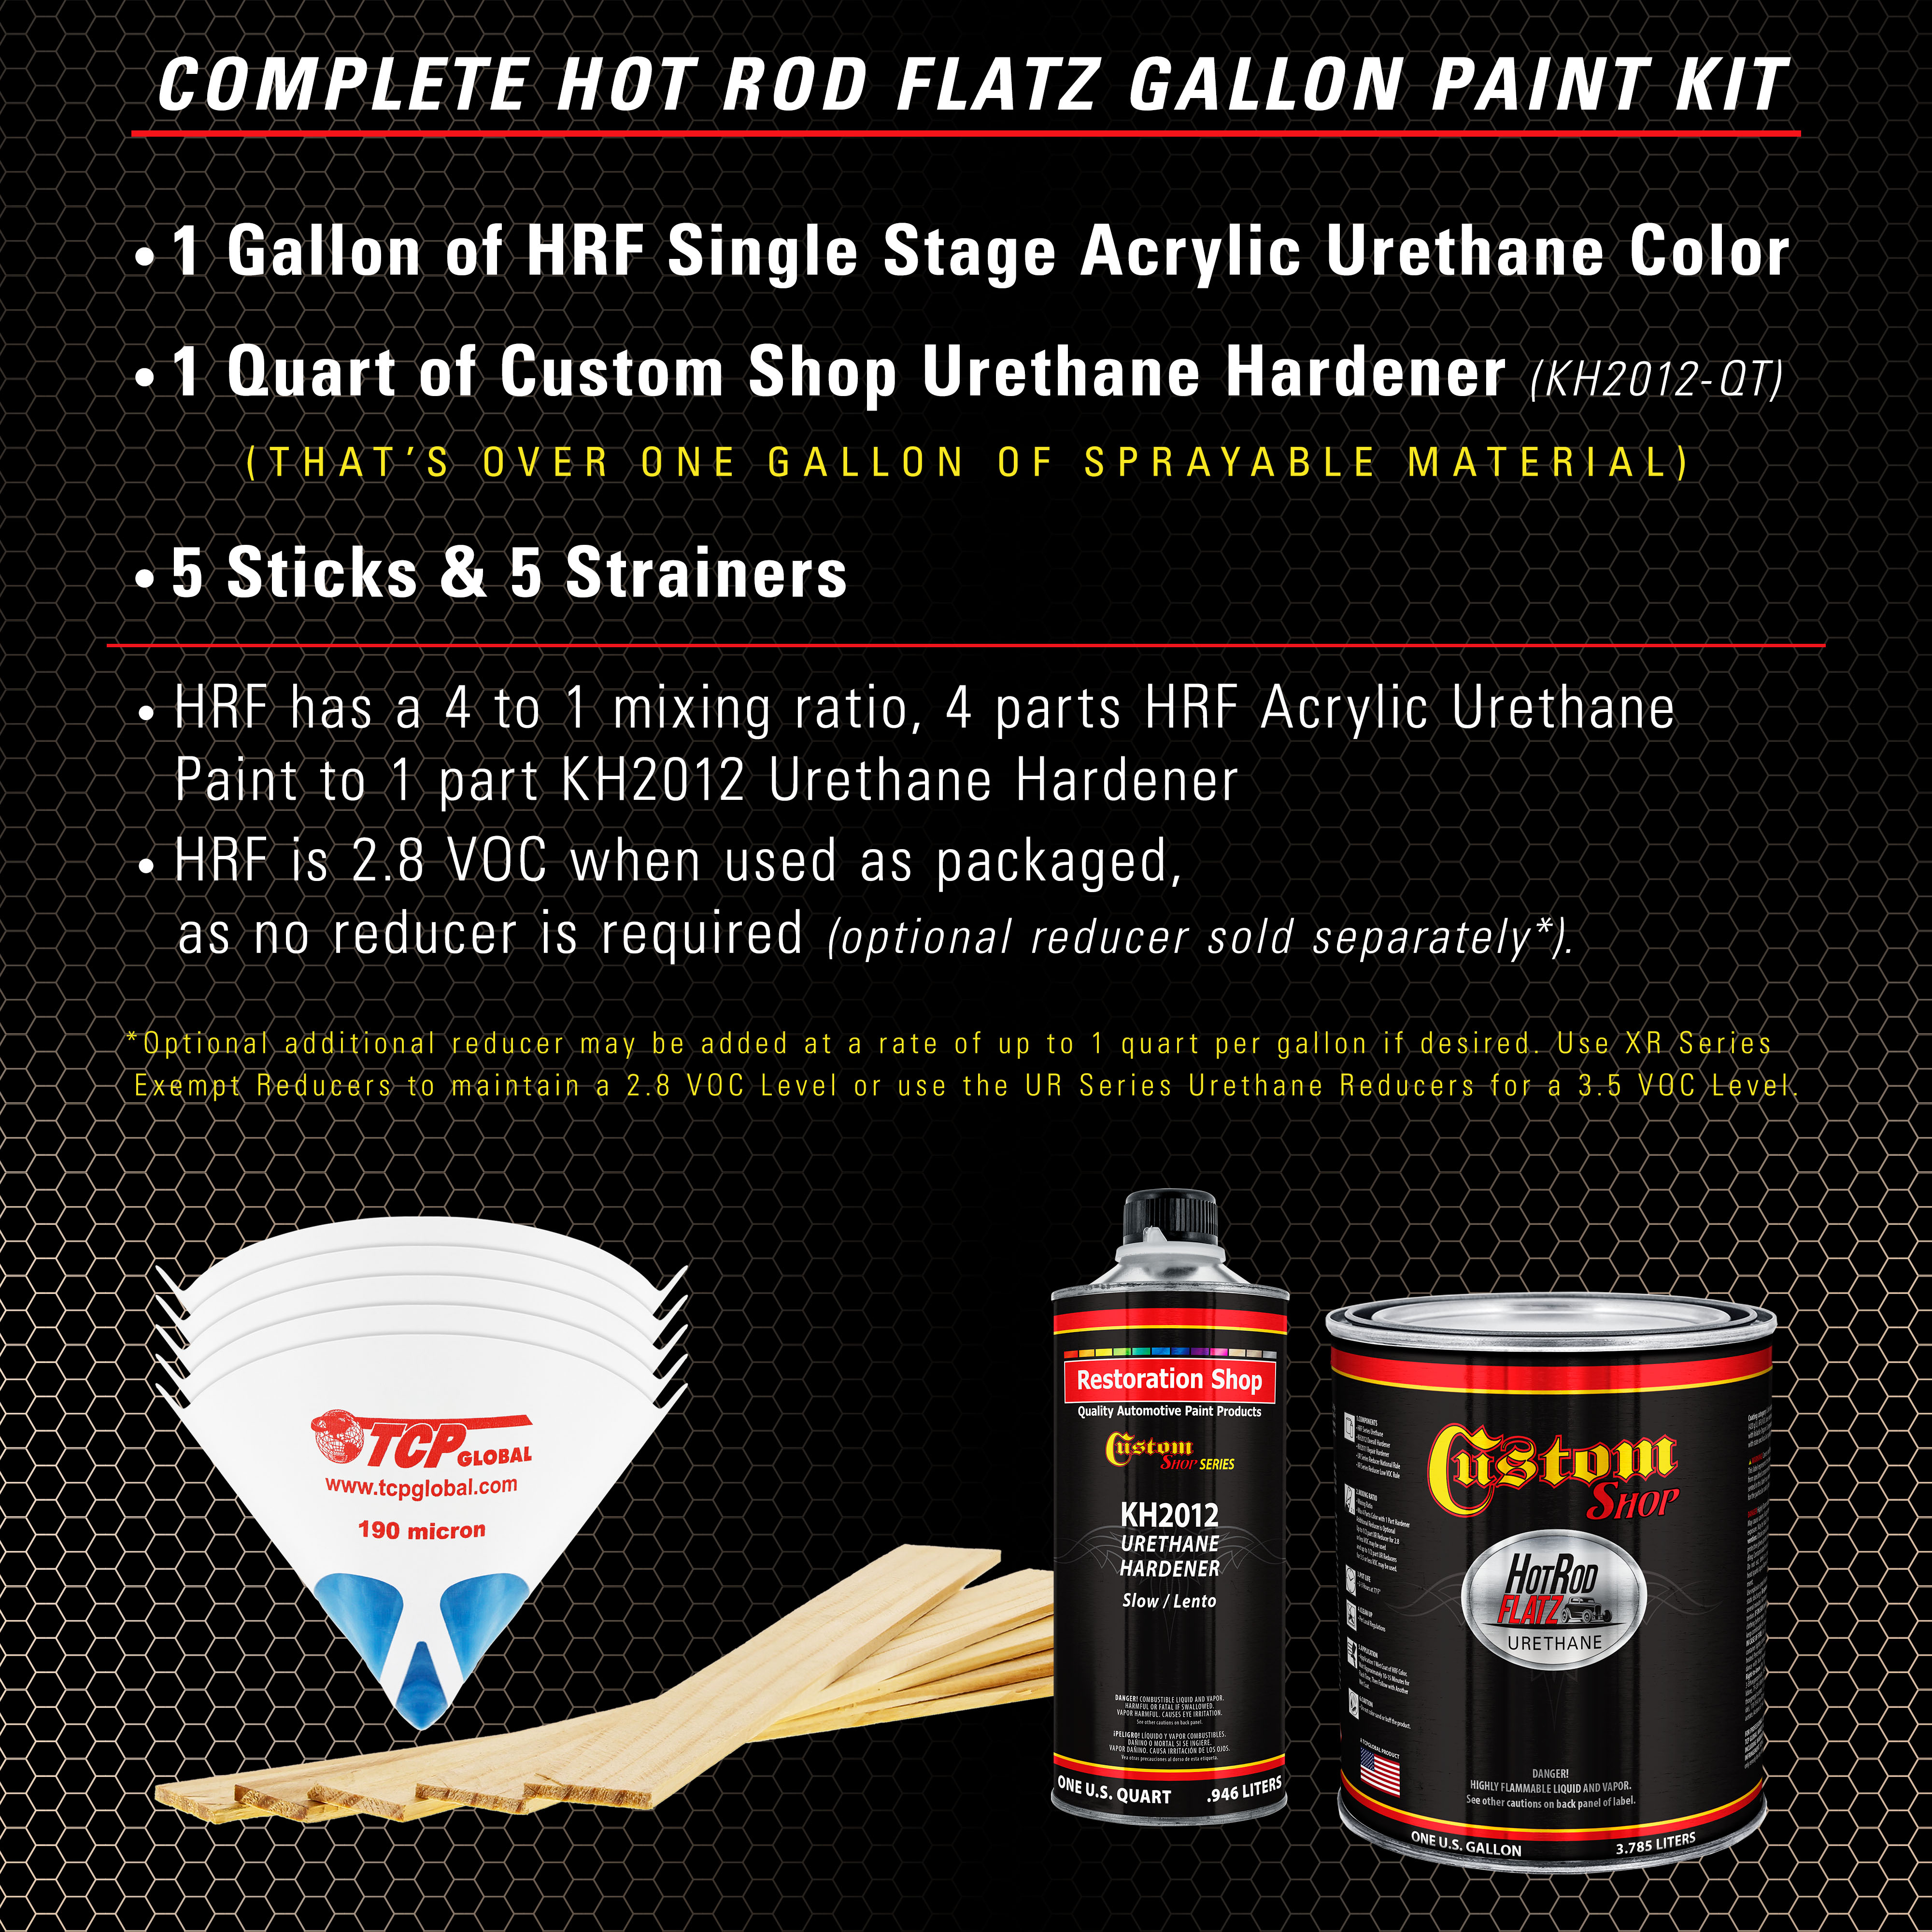 Custom Shop - Peach - Hot Rod Flatz Flat Matte Satin Urethane Auto Paint - Complete Gallon Paint Kit - Professional Low Sheen Automotive, Car Truck Coating, 4:1 Mix Ratio - image 2 of 5